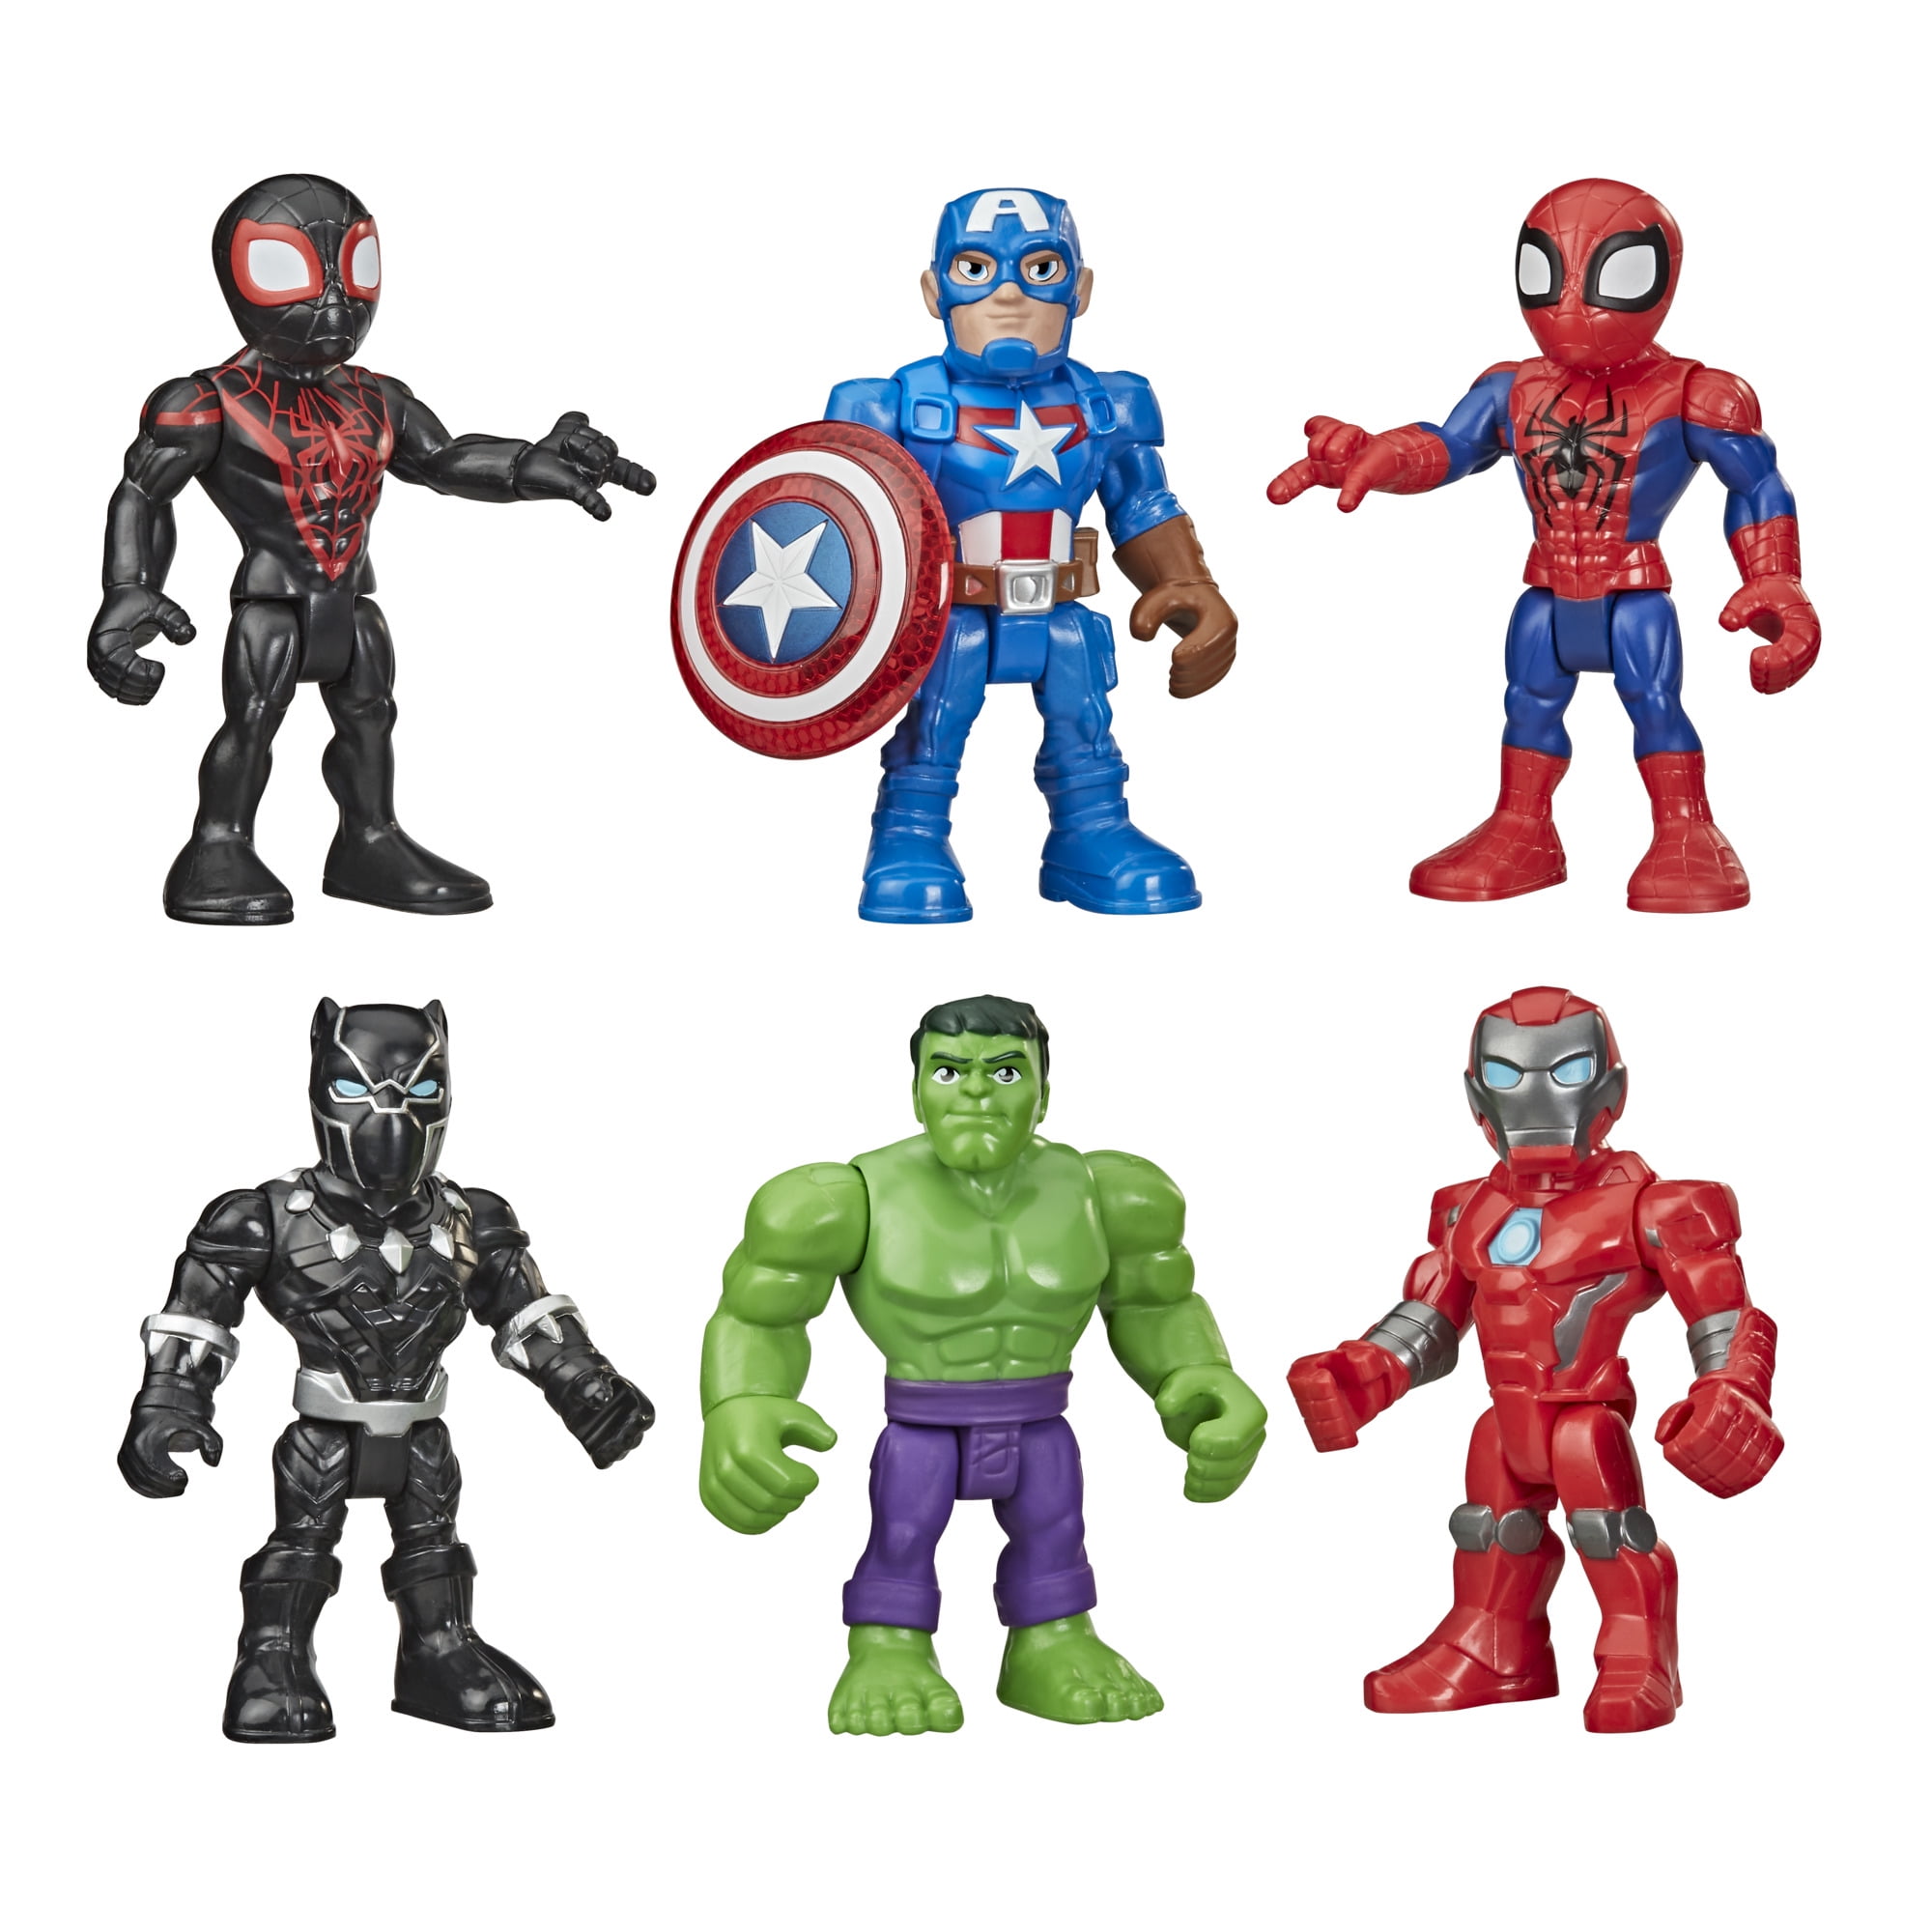 Playskool Marvel Super Hero Adventures 6-Pack Action Figures Toys New 2020 